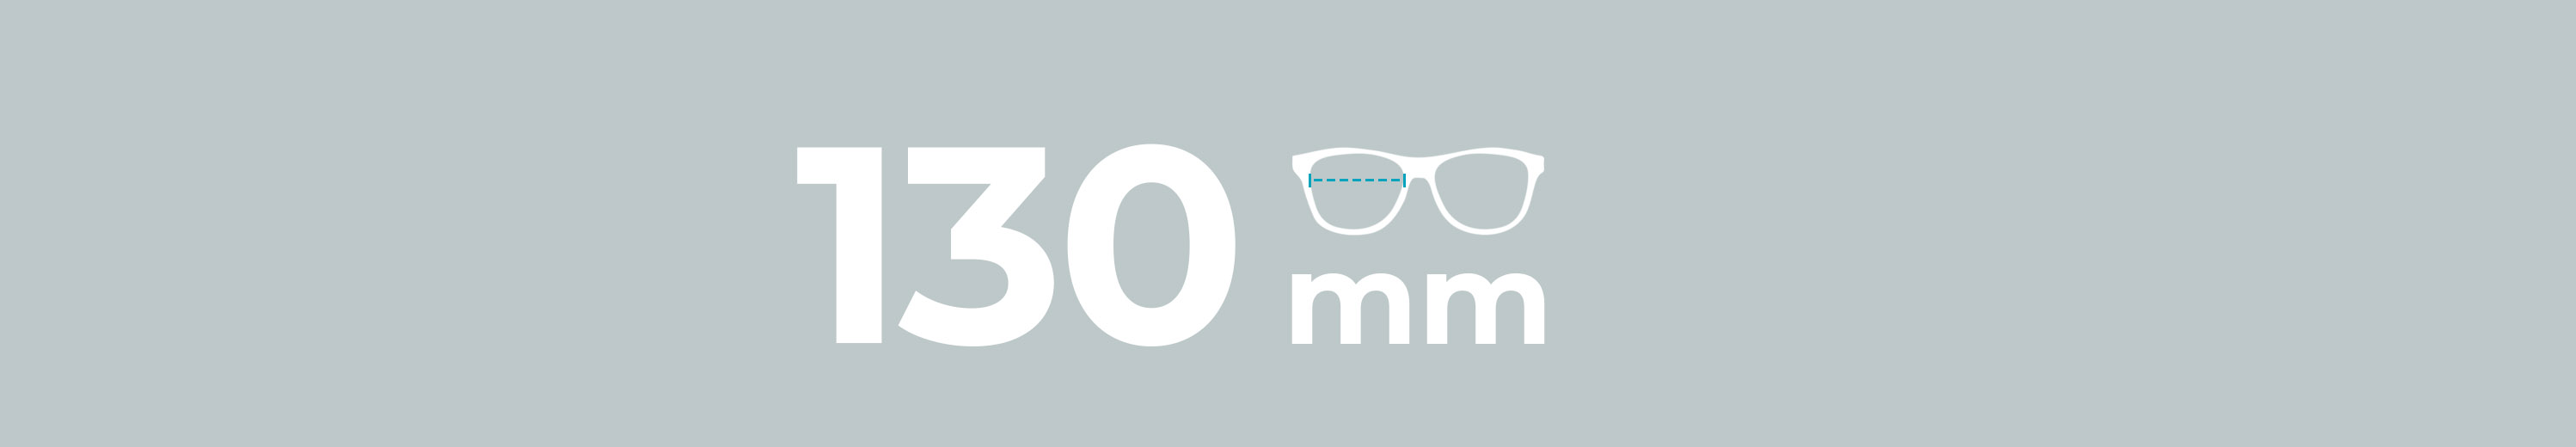 Lens Size: 130mm Glasses